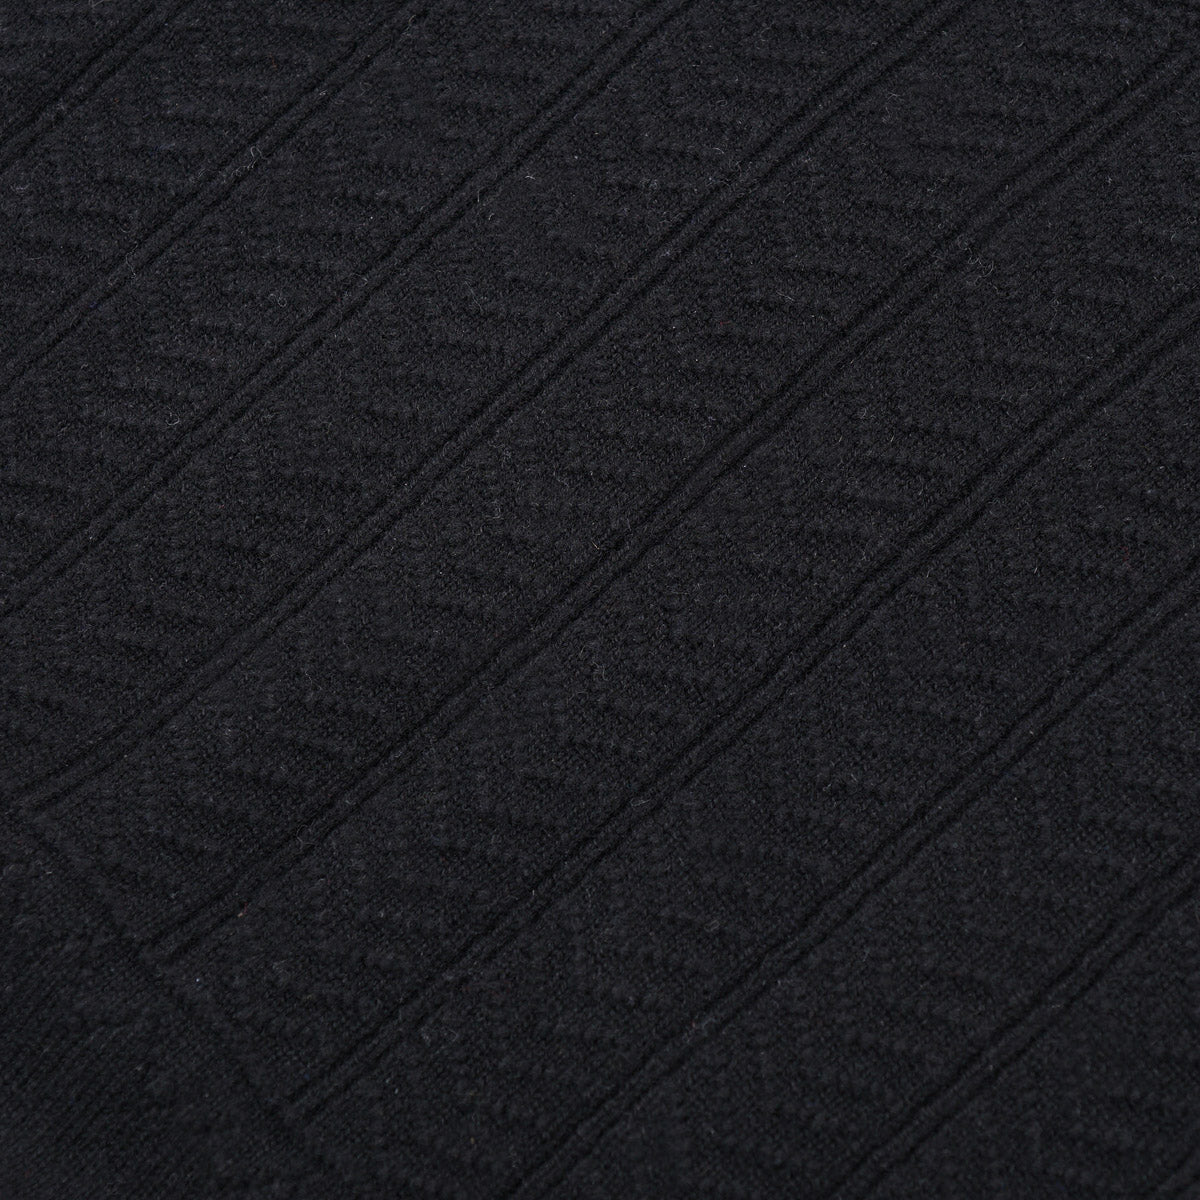 Kiton Patterned  Knit Cashmere Sweater - Top Shelf Apparel